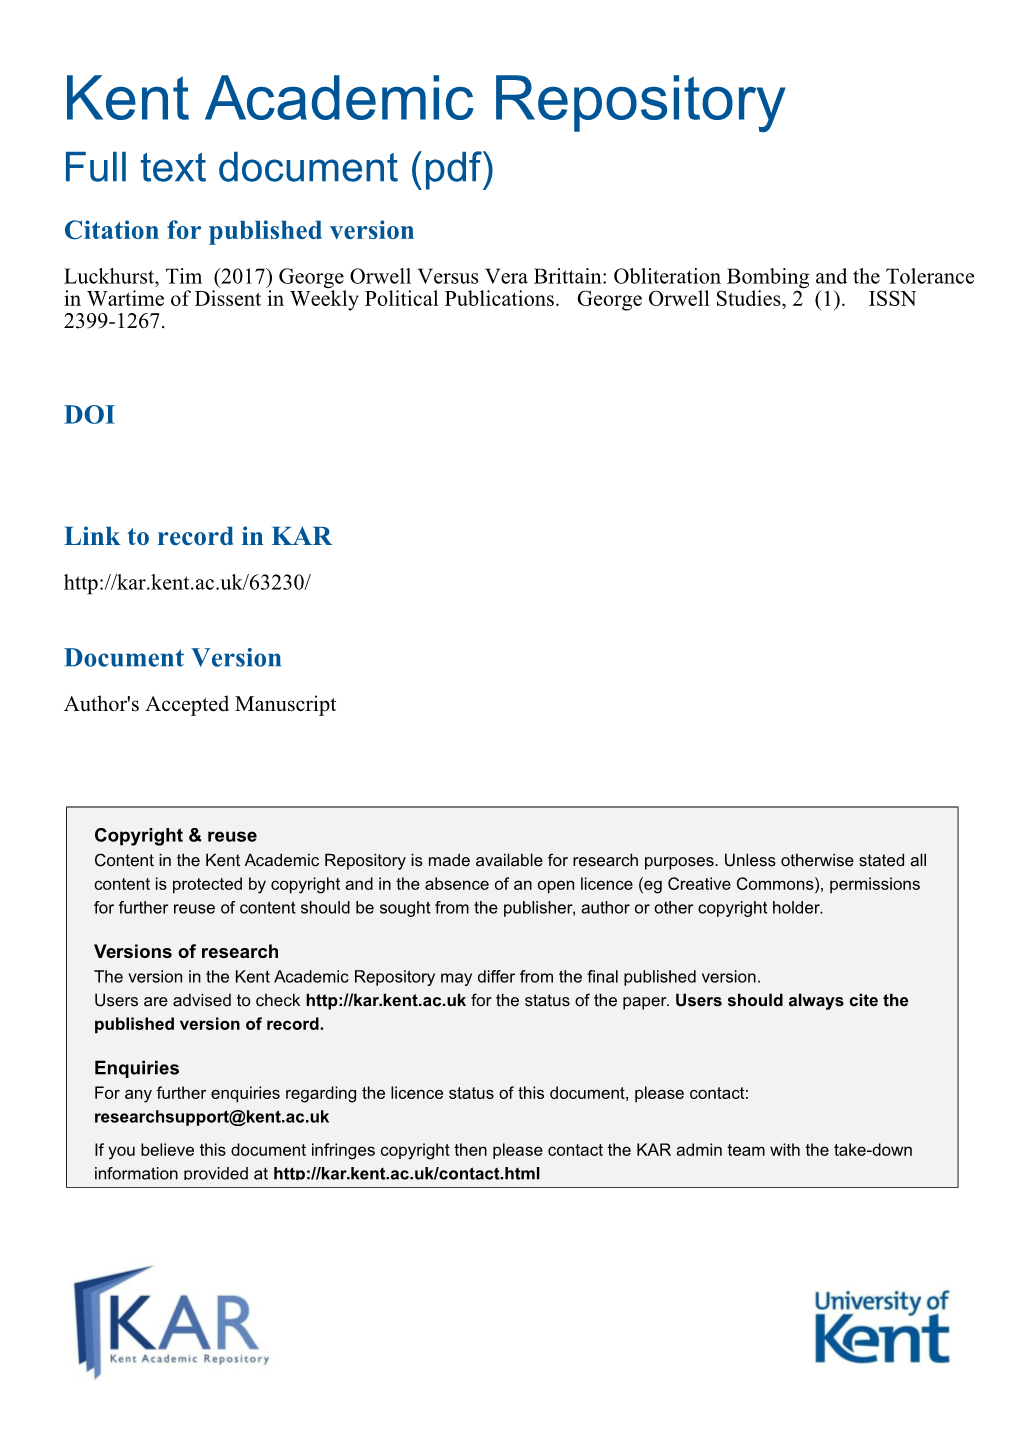 Kent Academic Repository Full Text Document (Pdf)